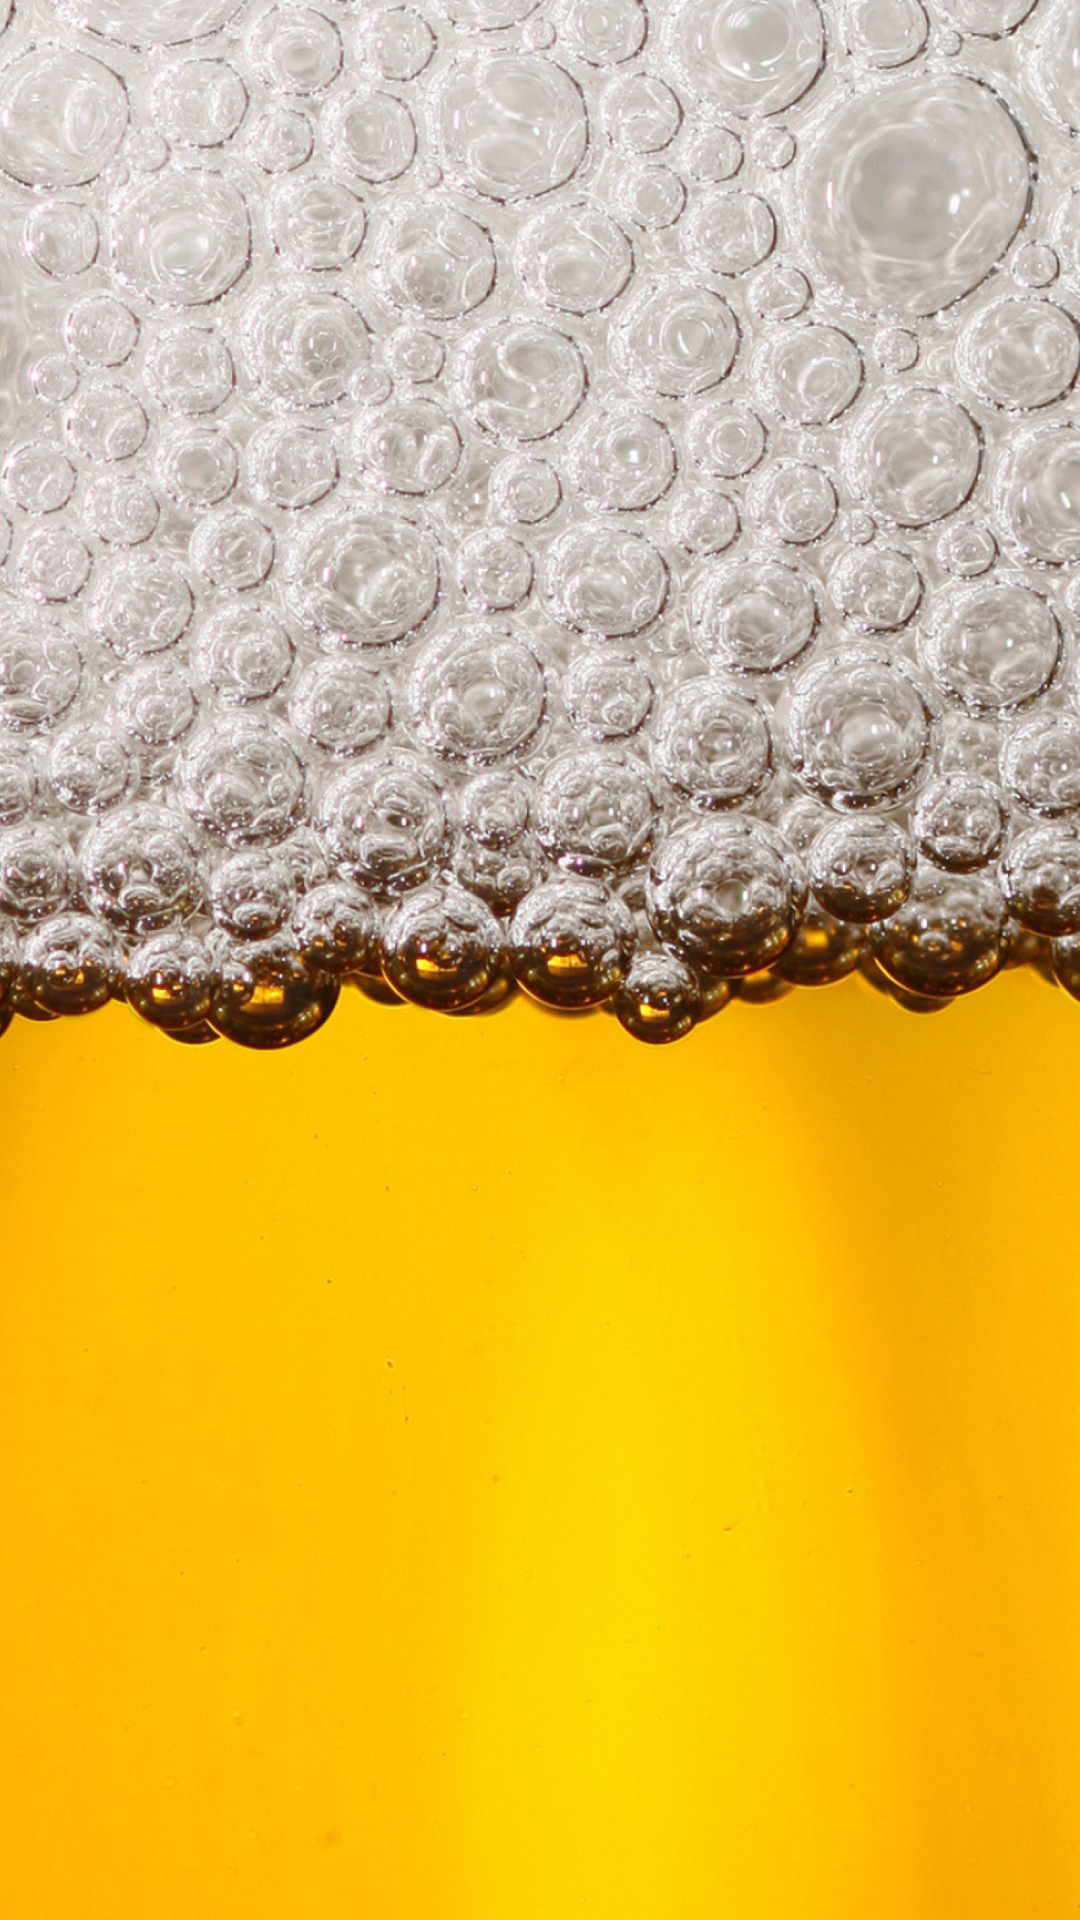 Das Beer Bubbles Wallpaper 1080x1920